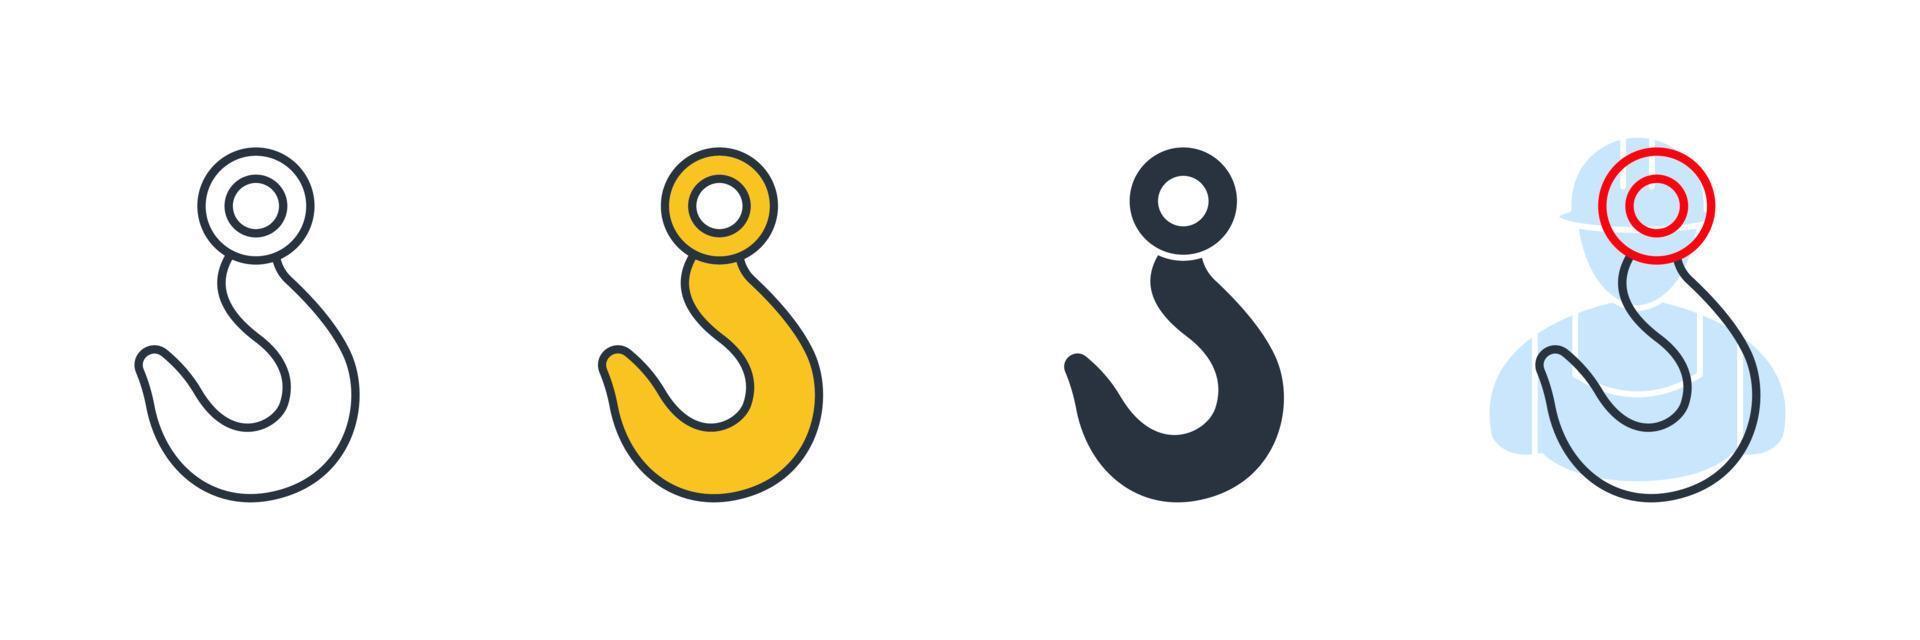 Kranhaken-Symbol-Logo-Vektor-Illustration. Kransymbolvorlage für Grafik- und Webdesign-Sammlung vektor